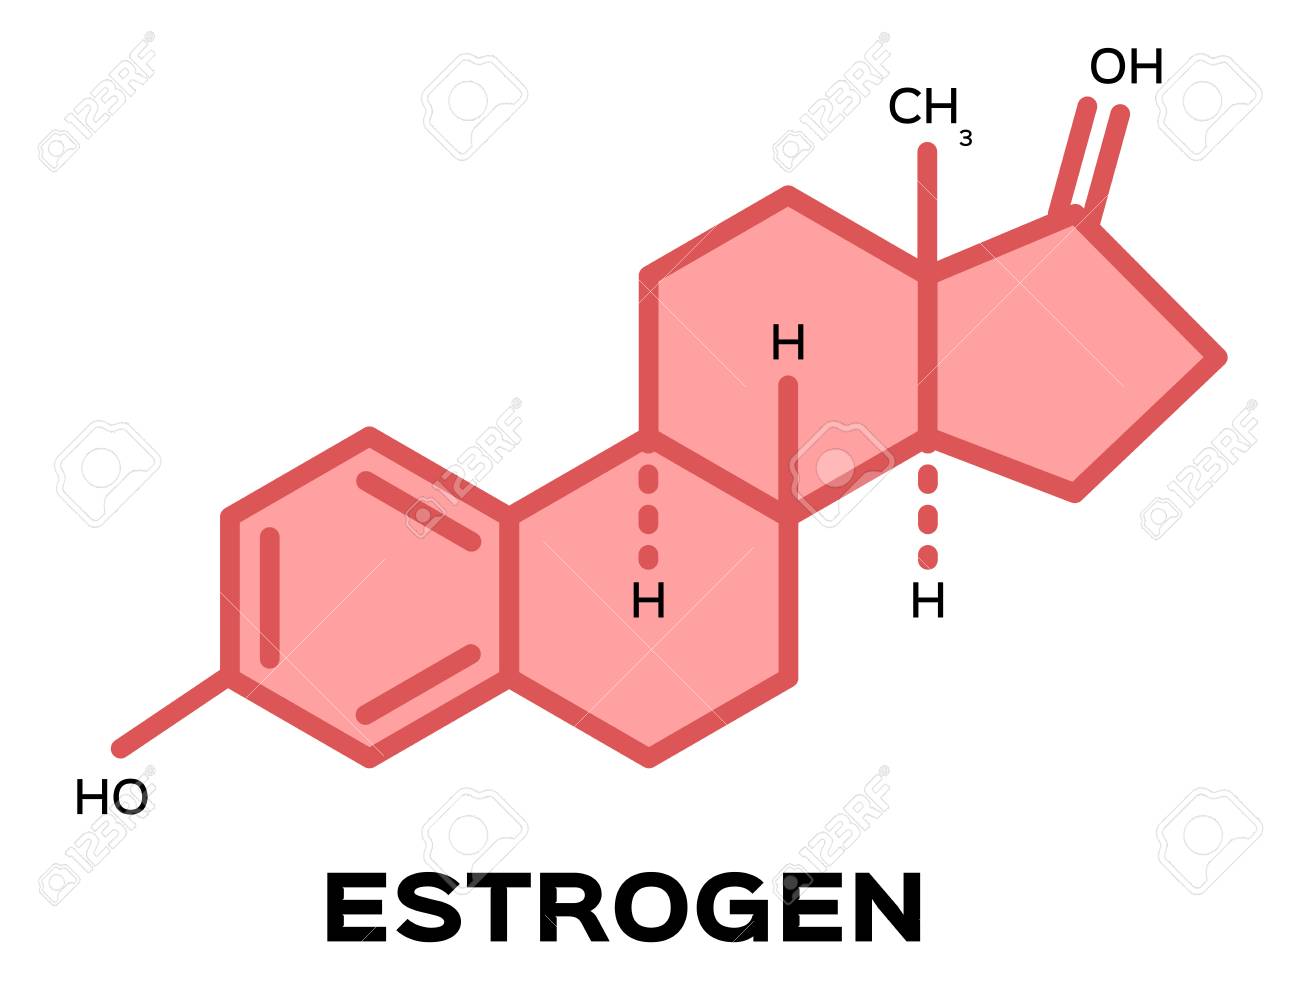 Role of Estrogen